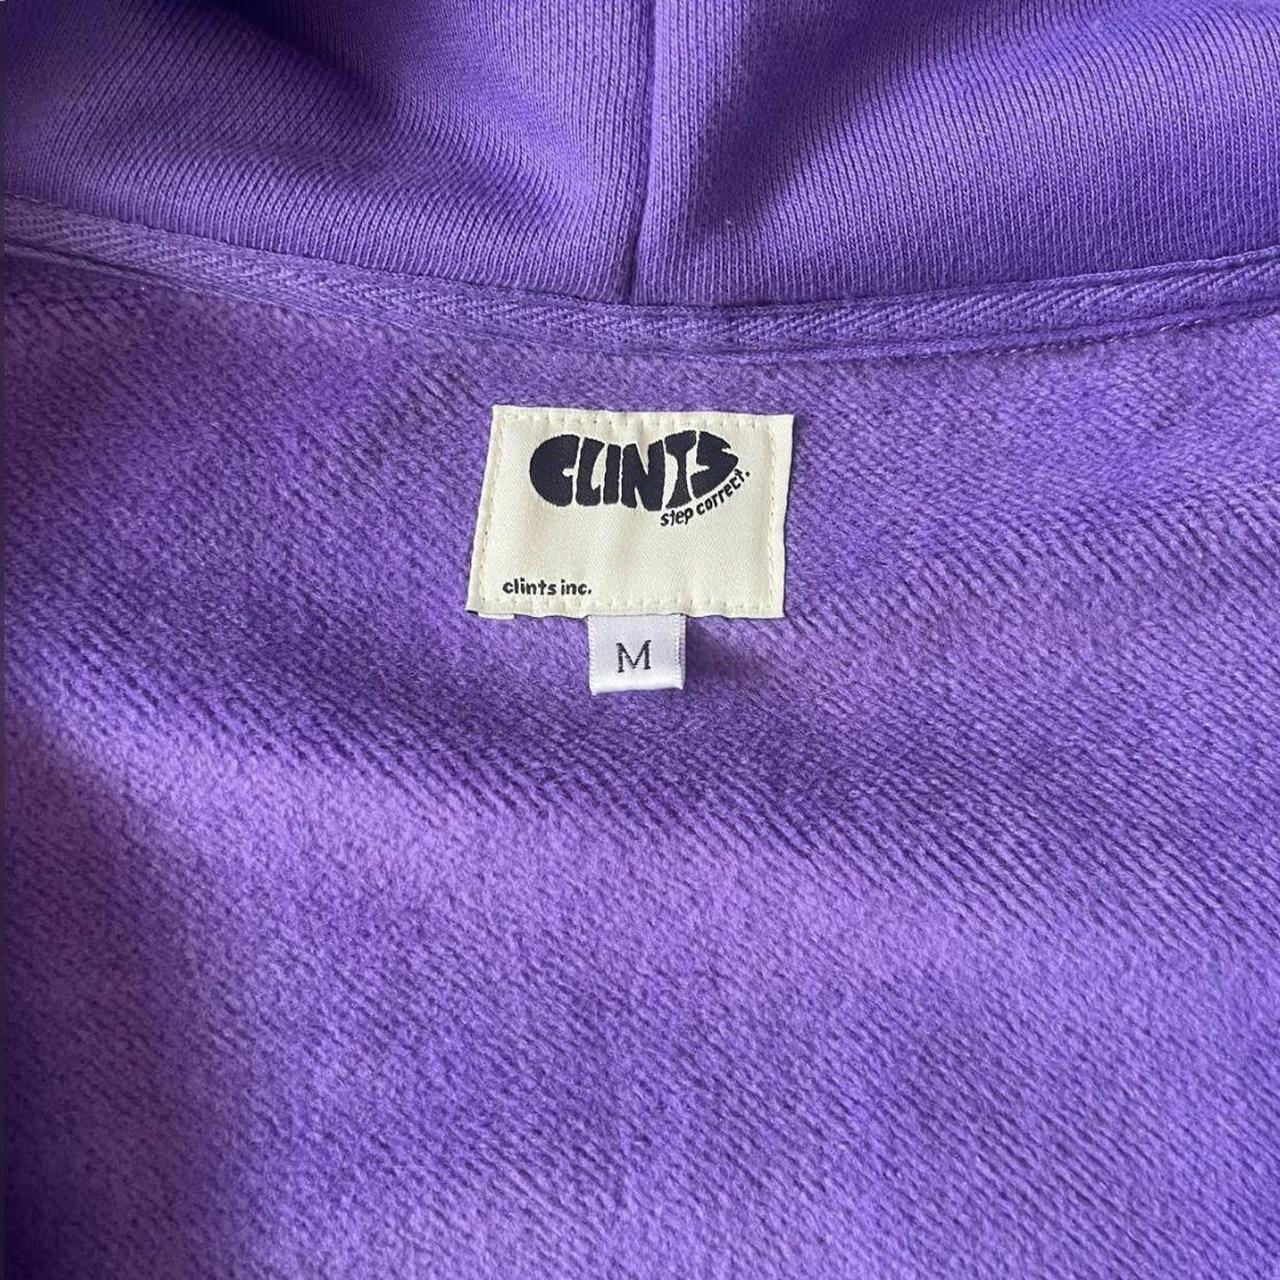 Clint’s inc purple zip-up hoodie - perfect... - Depop